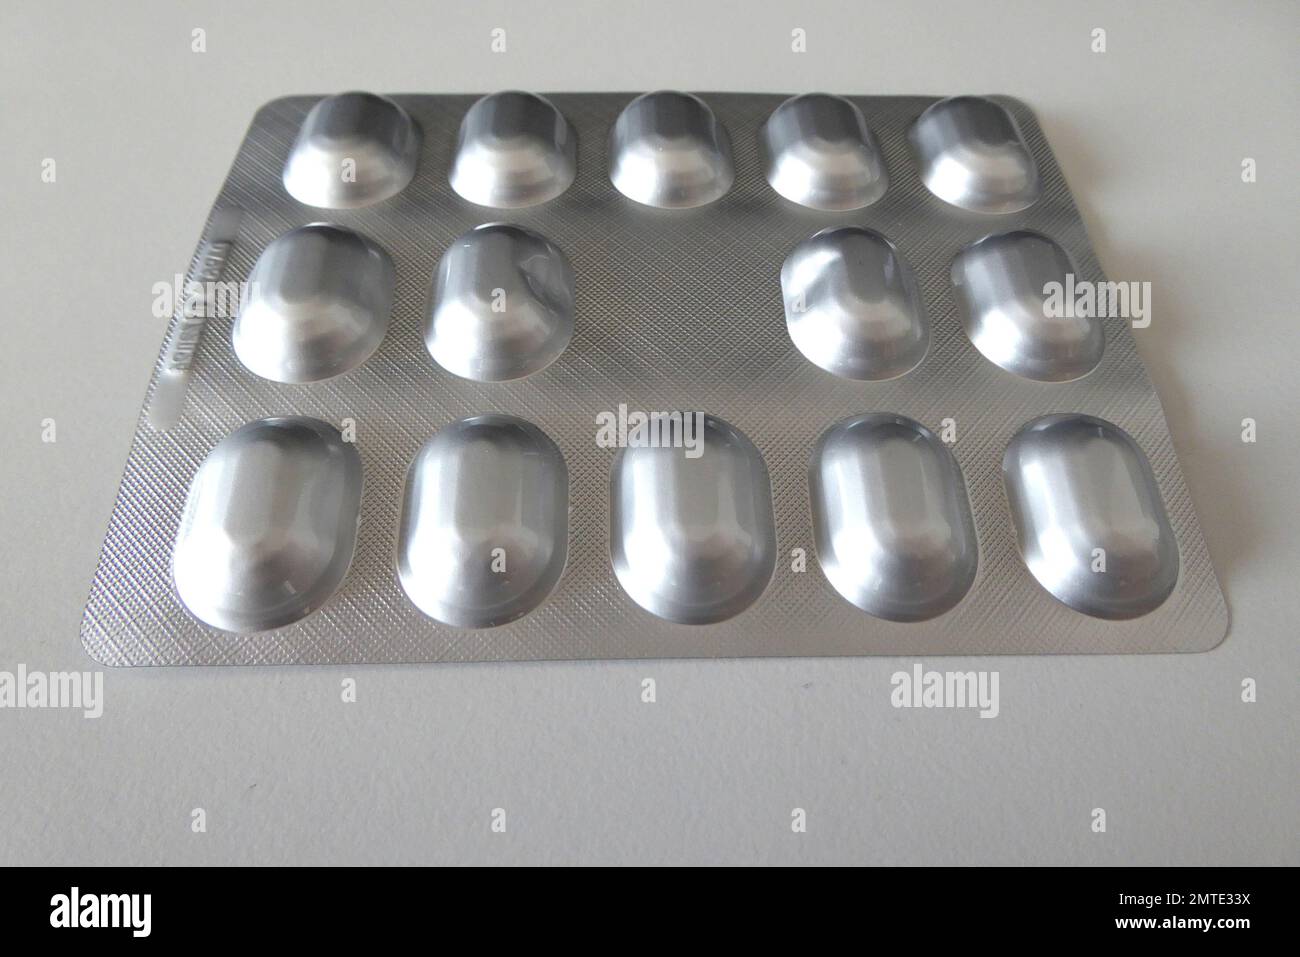 Tabletten / Medikament / Verpackung Stock Photo